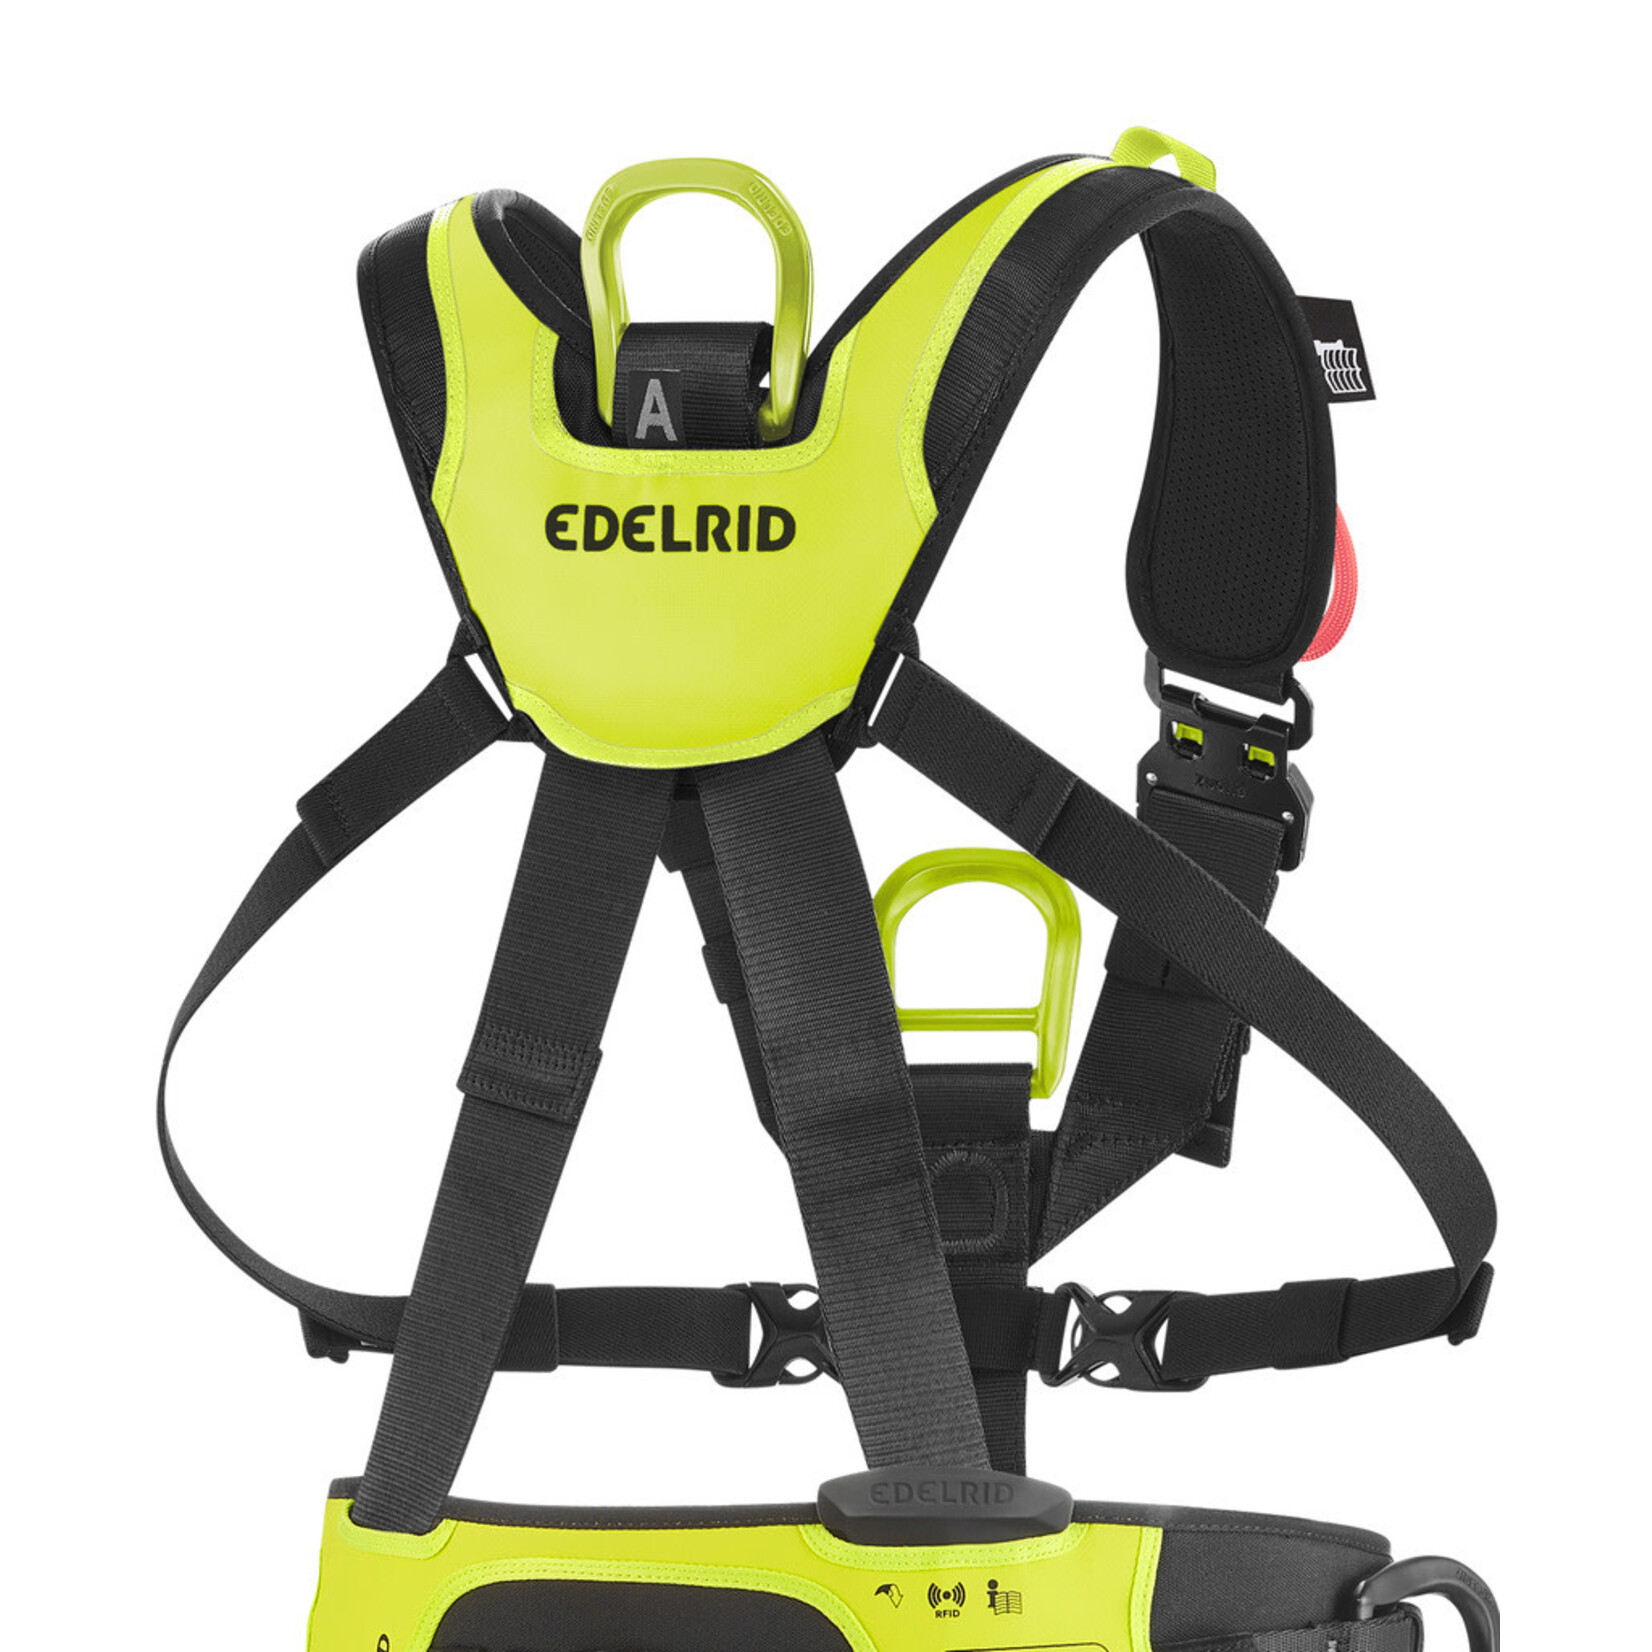 Edelrid Edelrid Vertic Triplelock II + Chest Cruiser, size 1, night/oasis